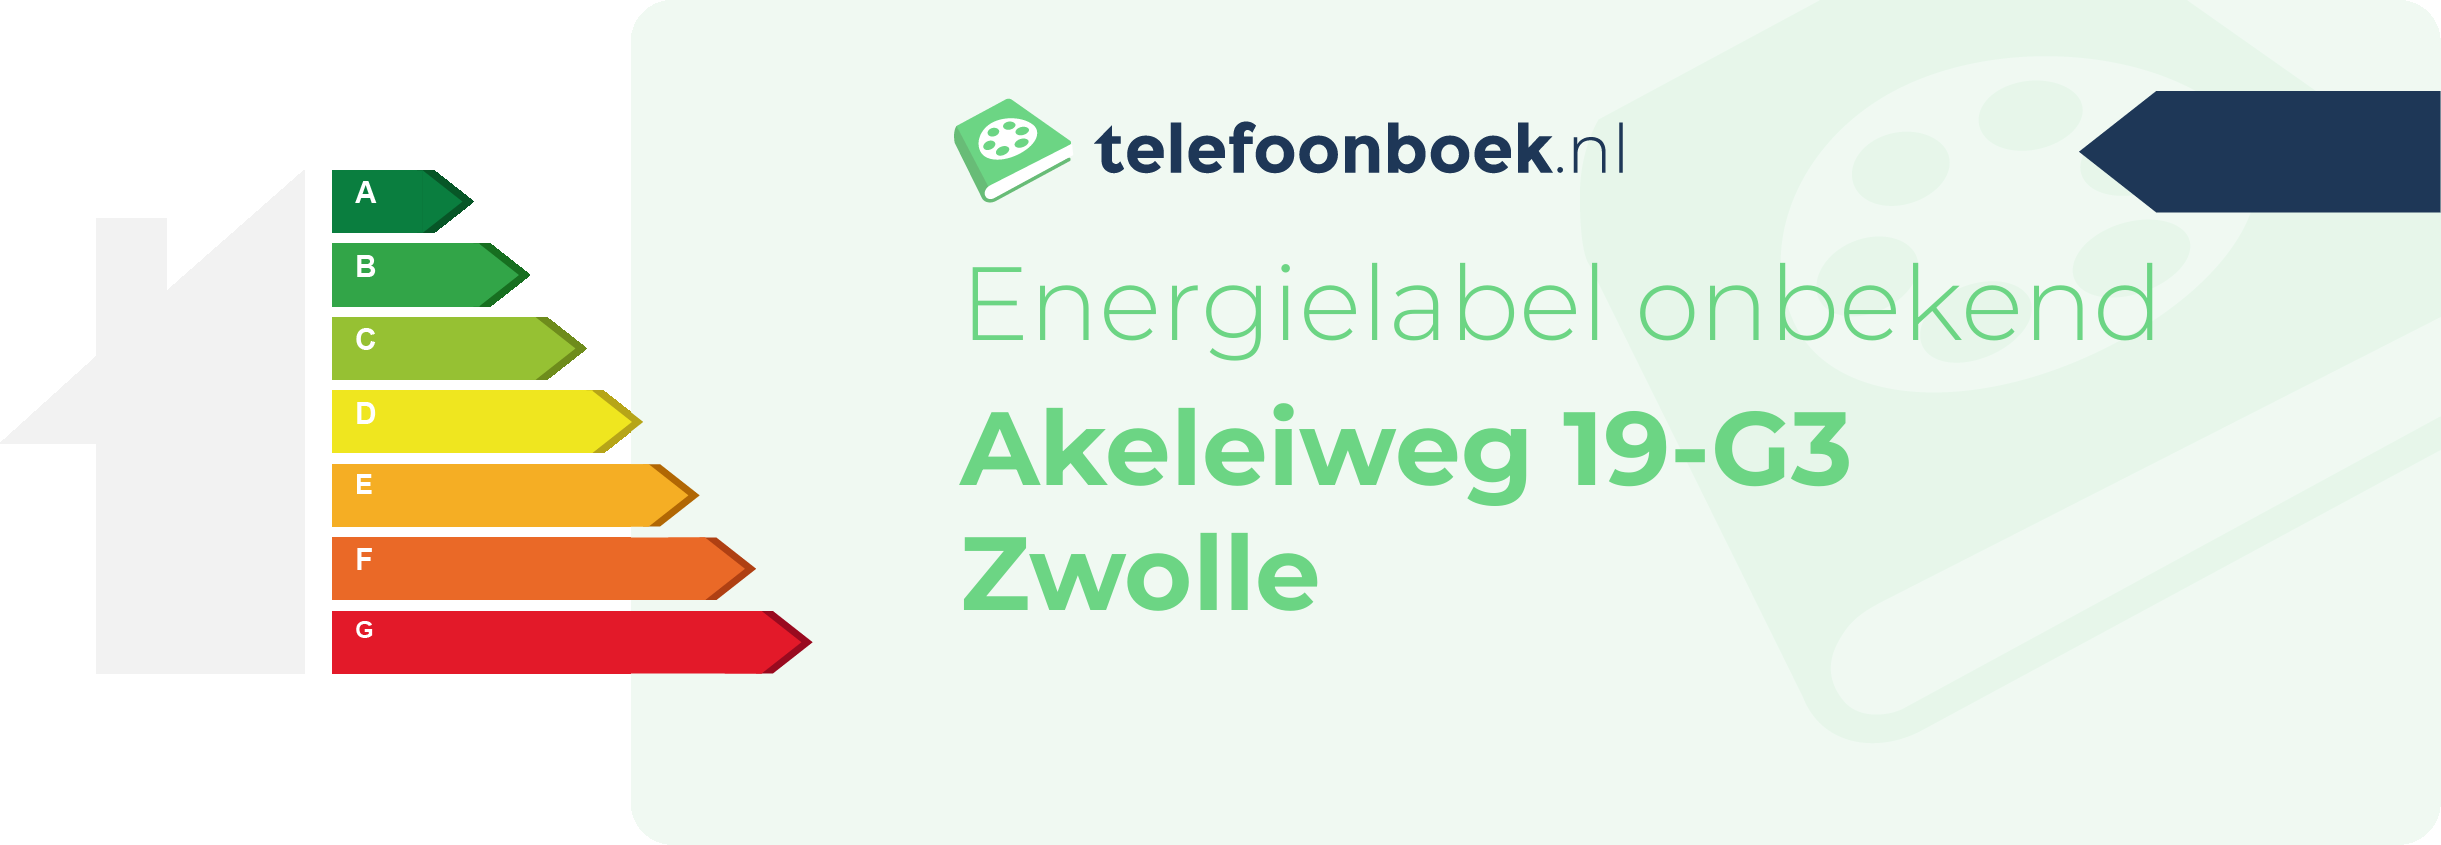 Energielabel Akeleiweg 19-G3 Zwolle